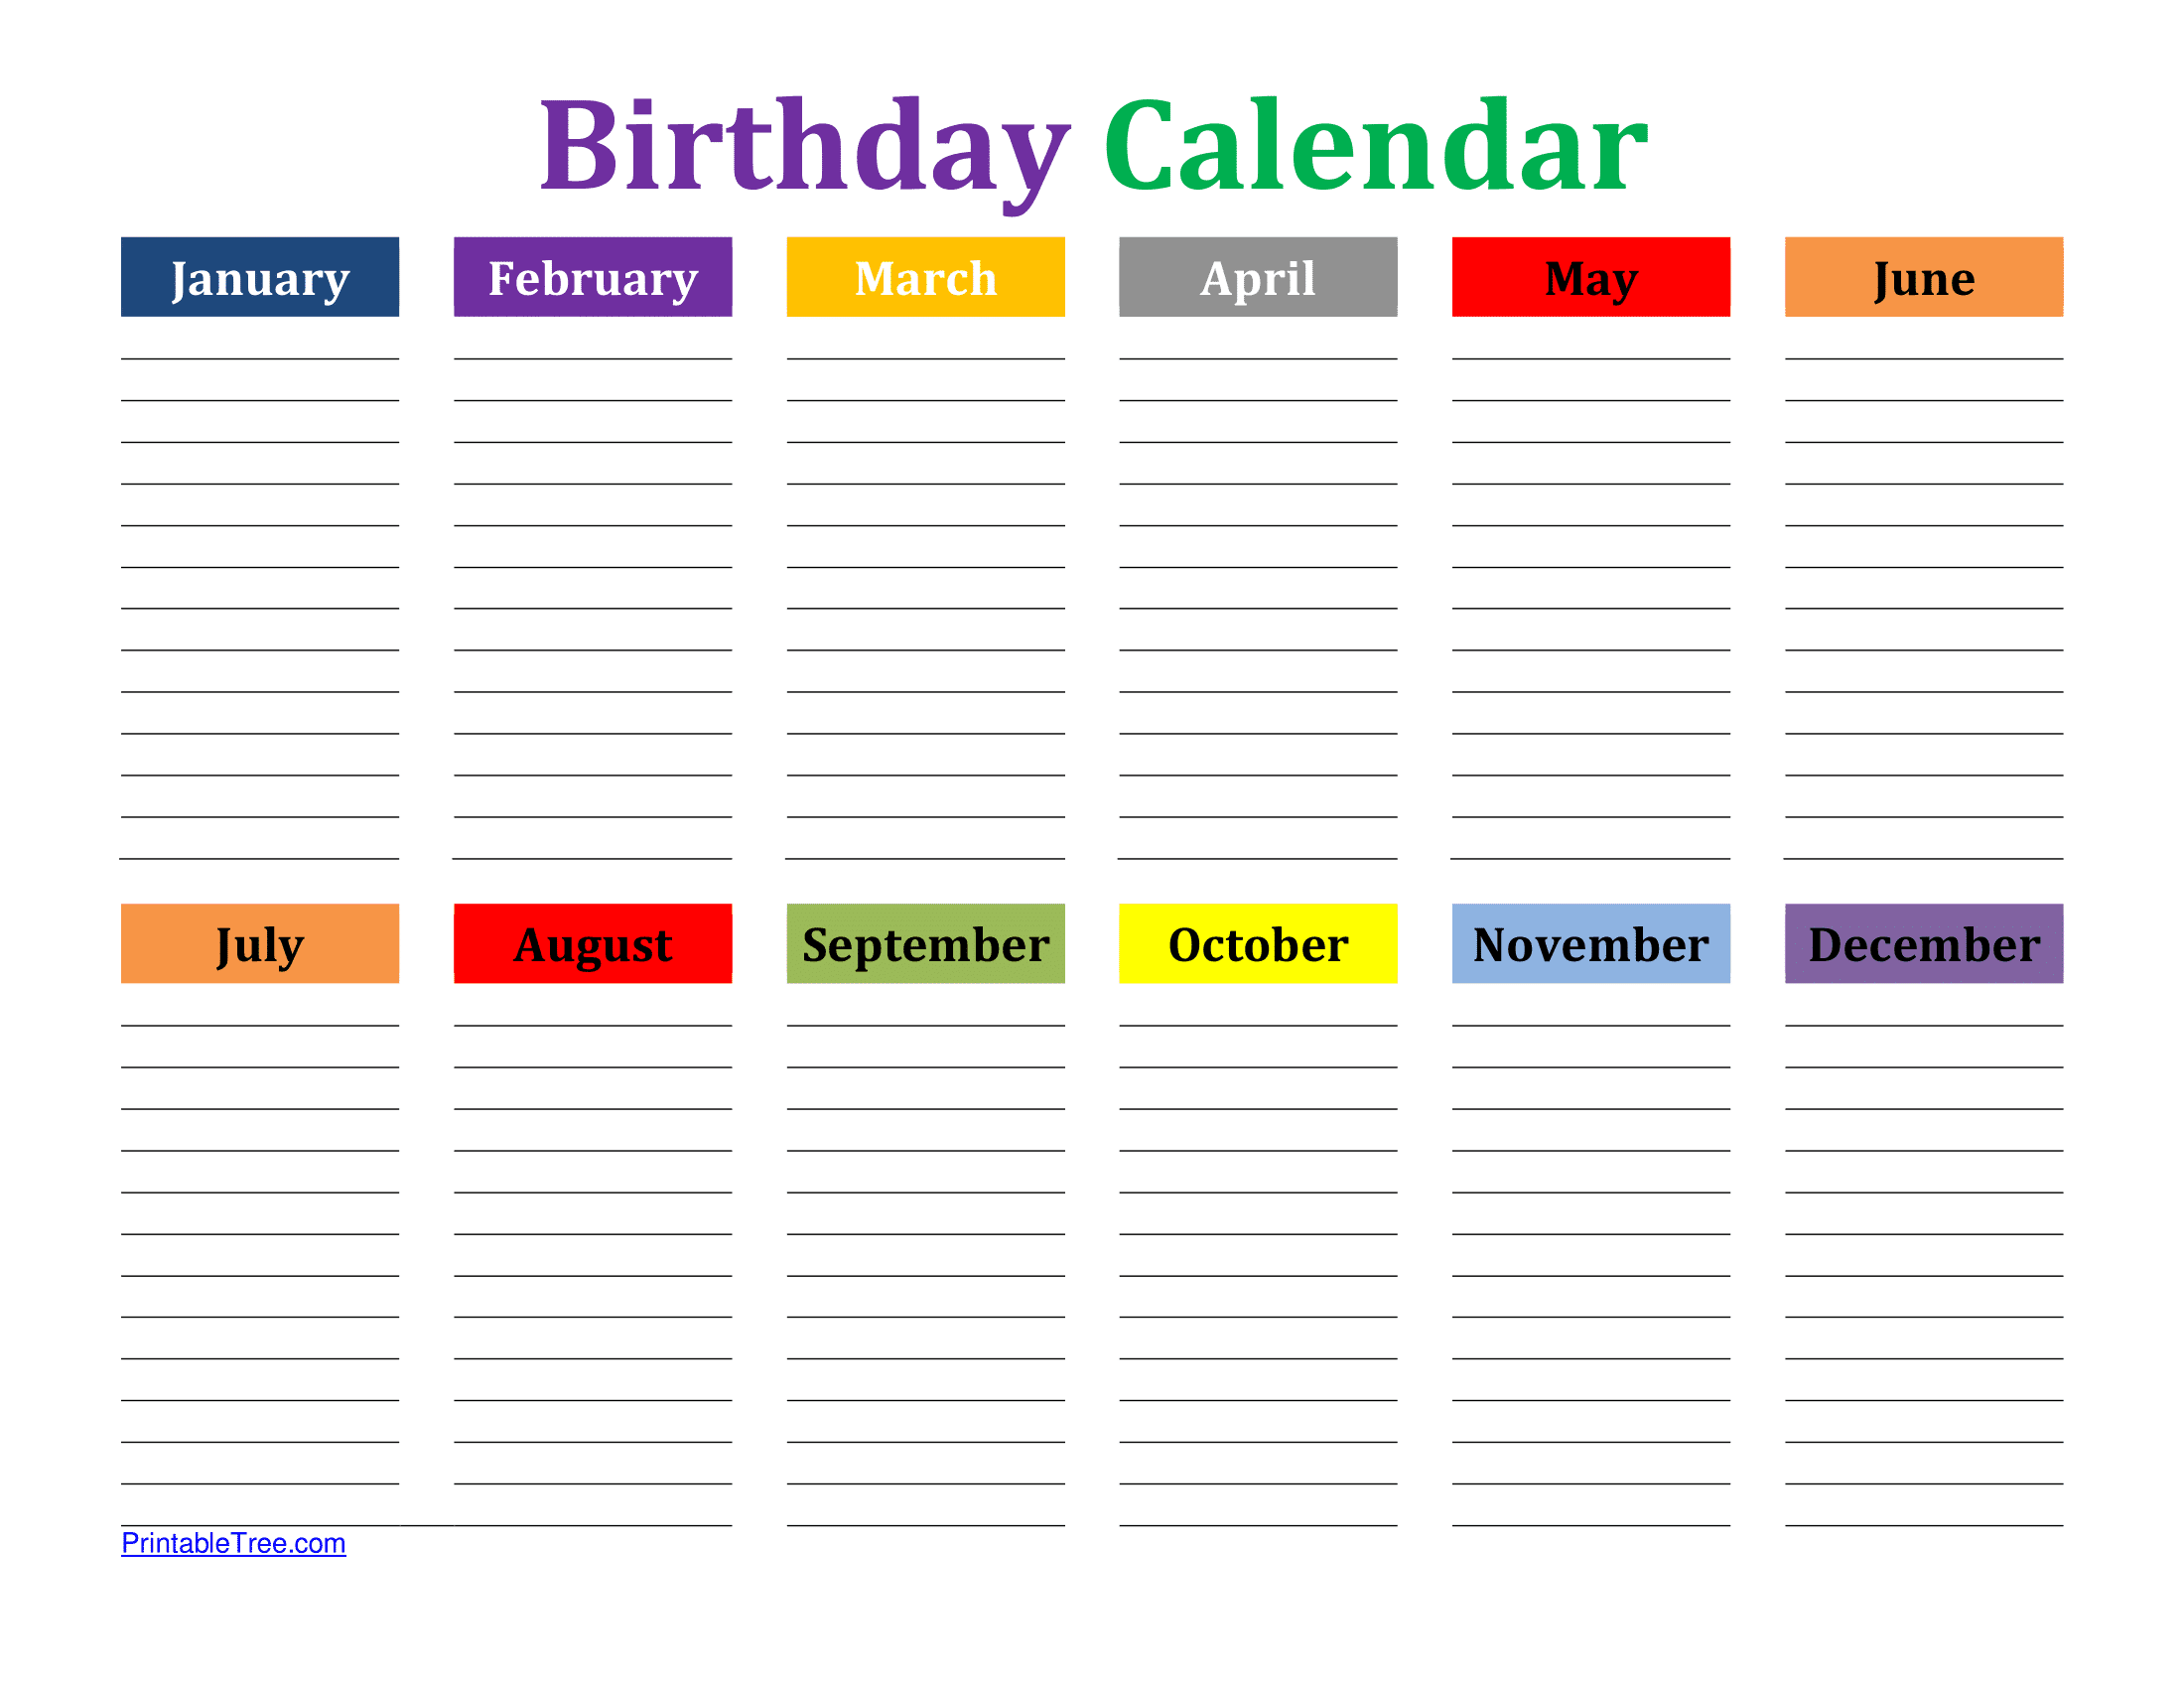 Free Birthday Calendar Printable PDF Templates Printable Tree - Free Printable Birthday Graph